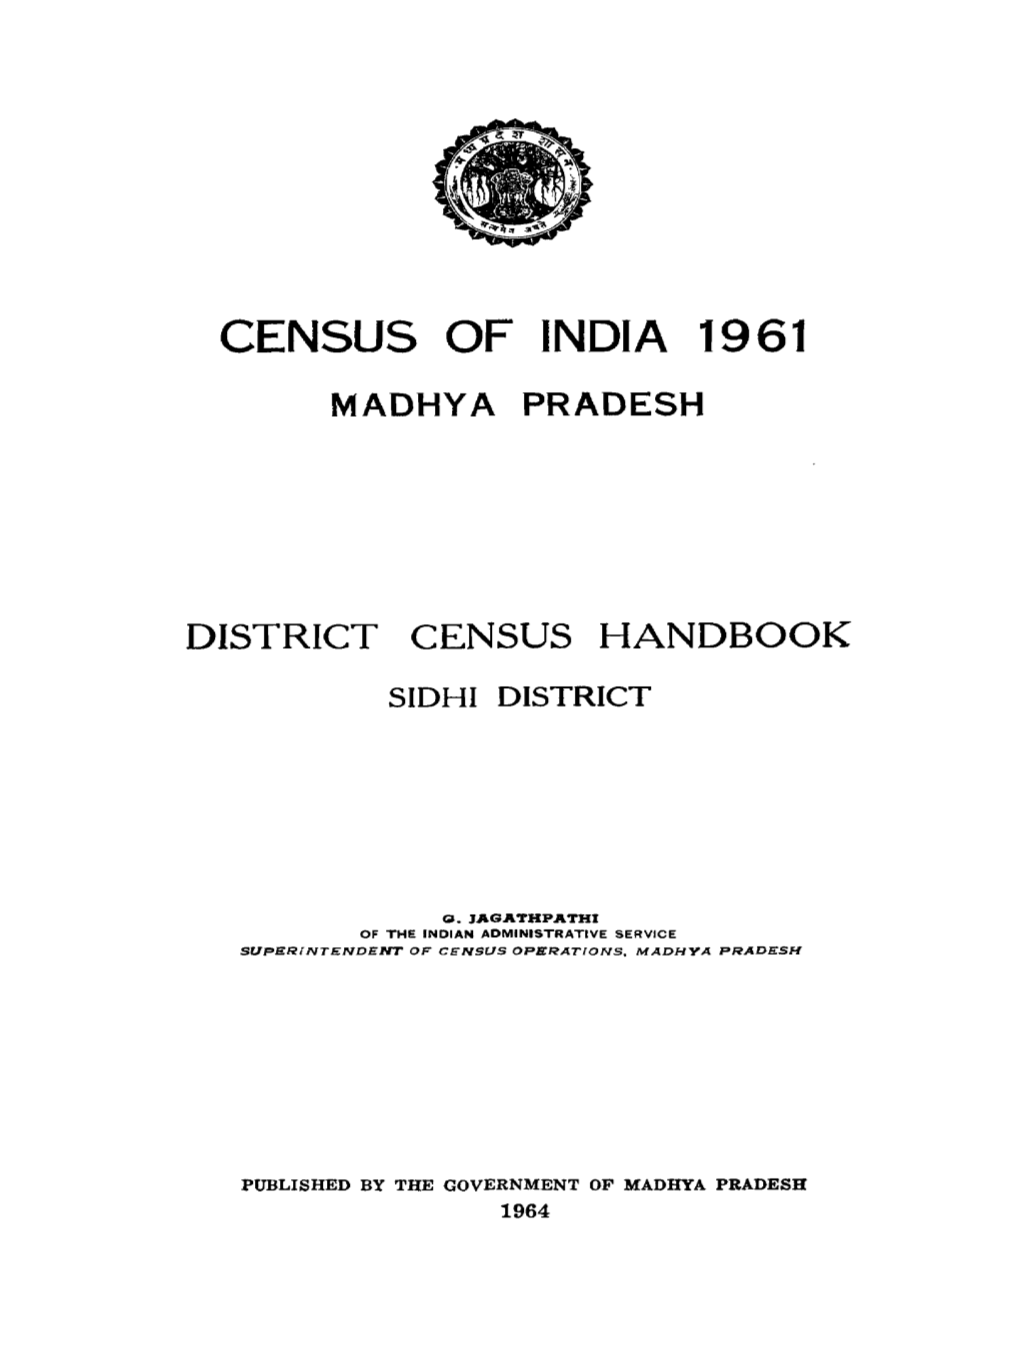 District Census Handbook, Sidhi